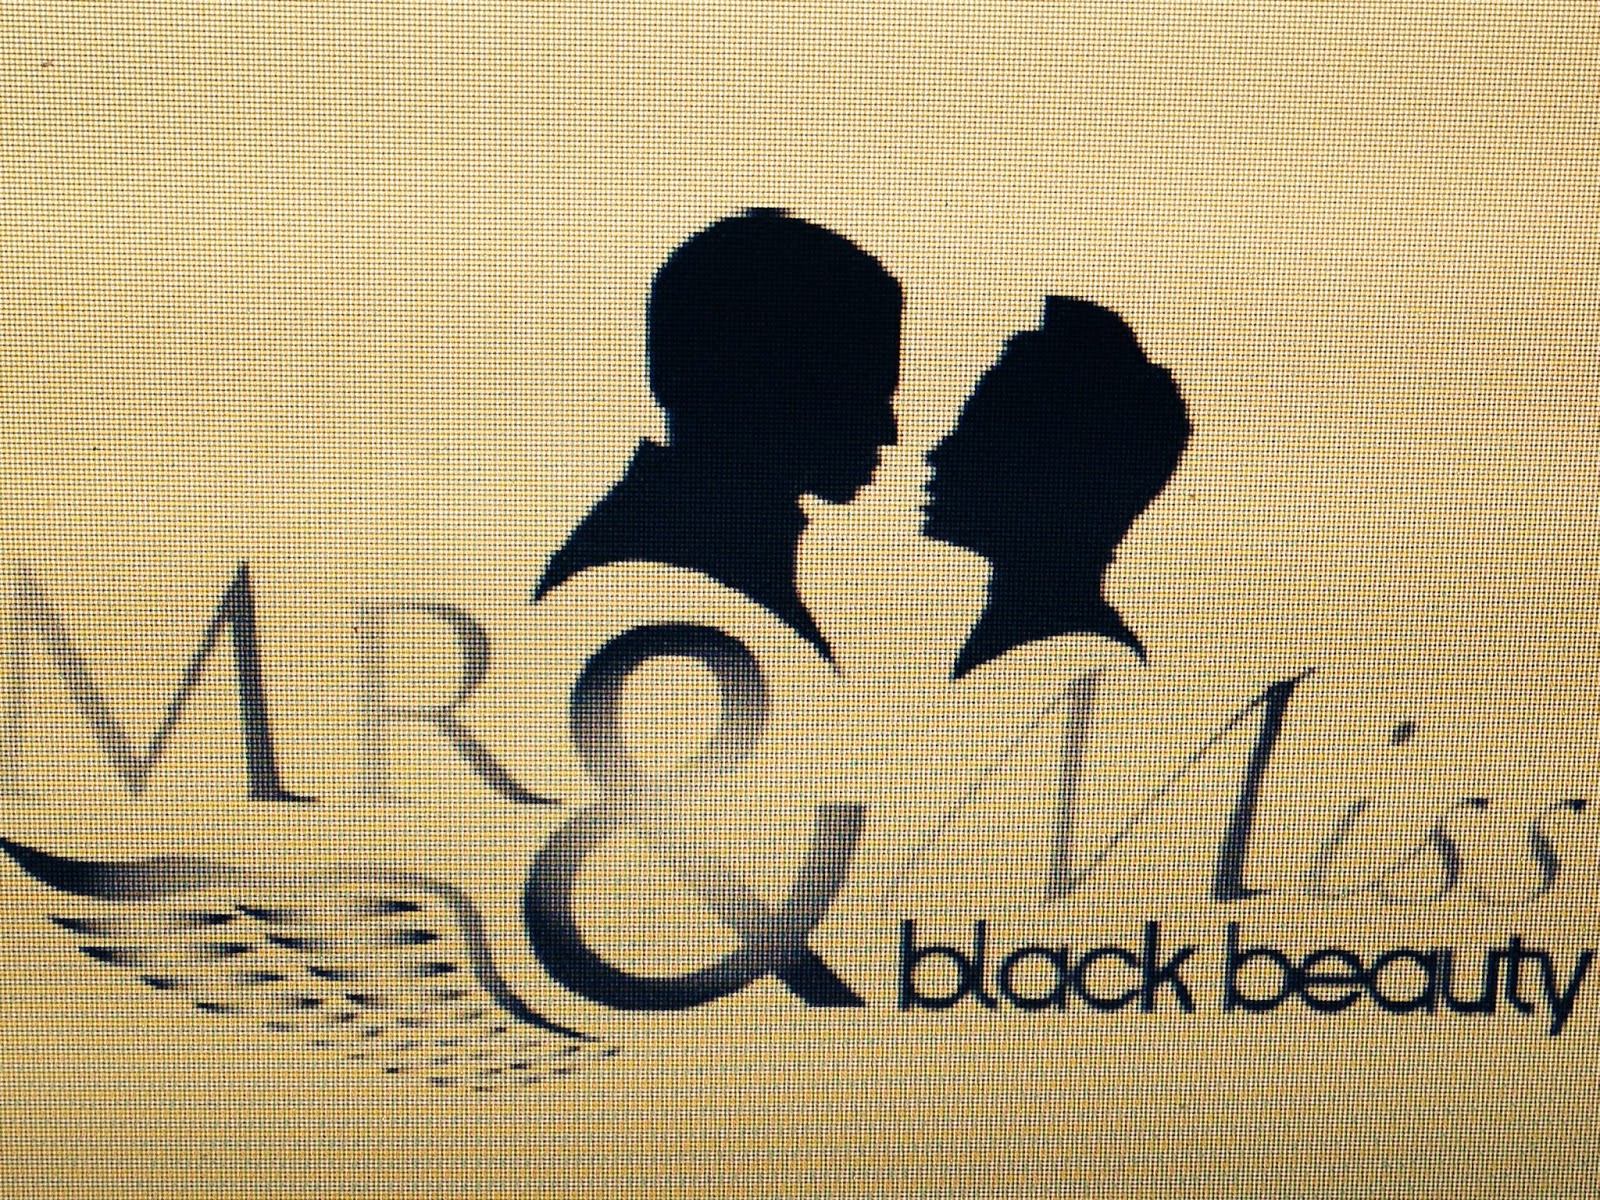 Mr & miss black beauty UK scholarship pageant 2014.